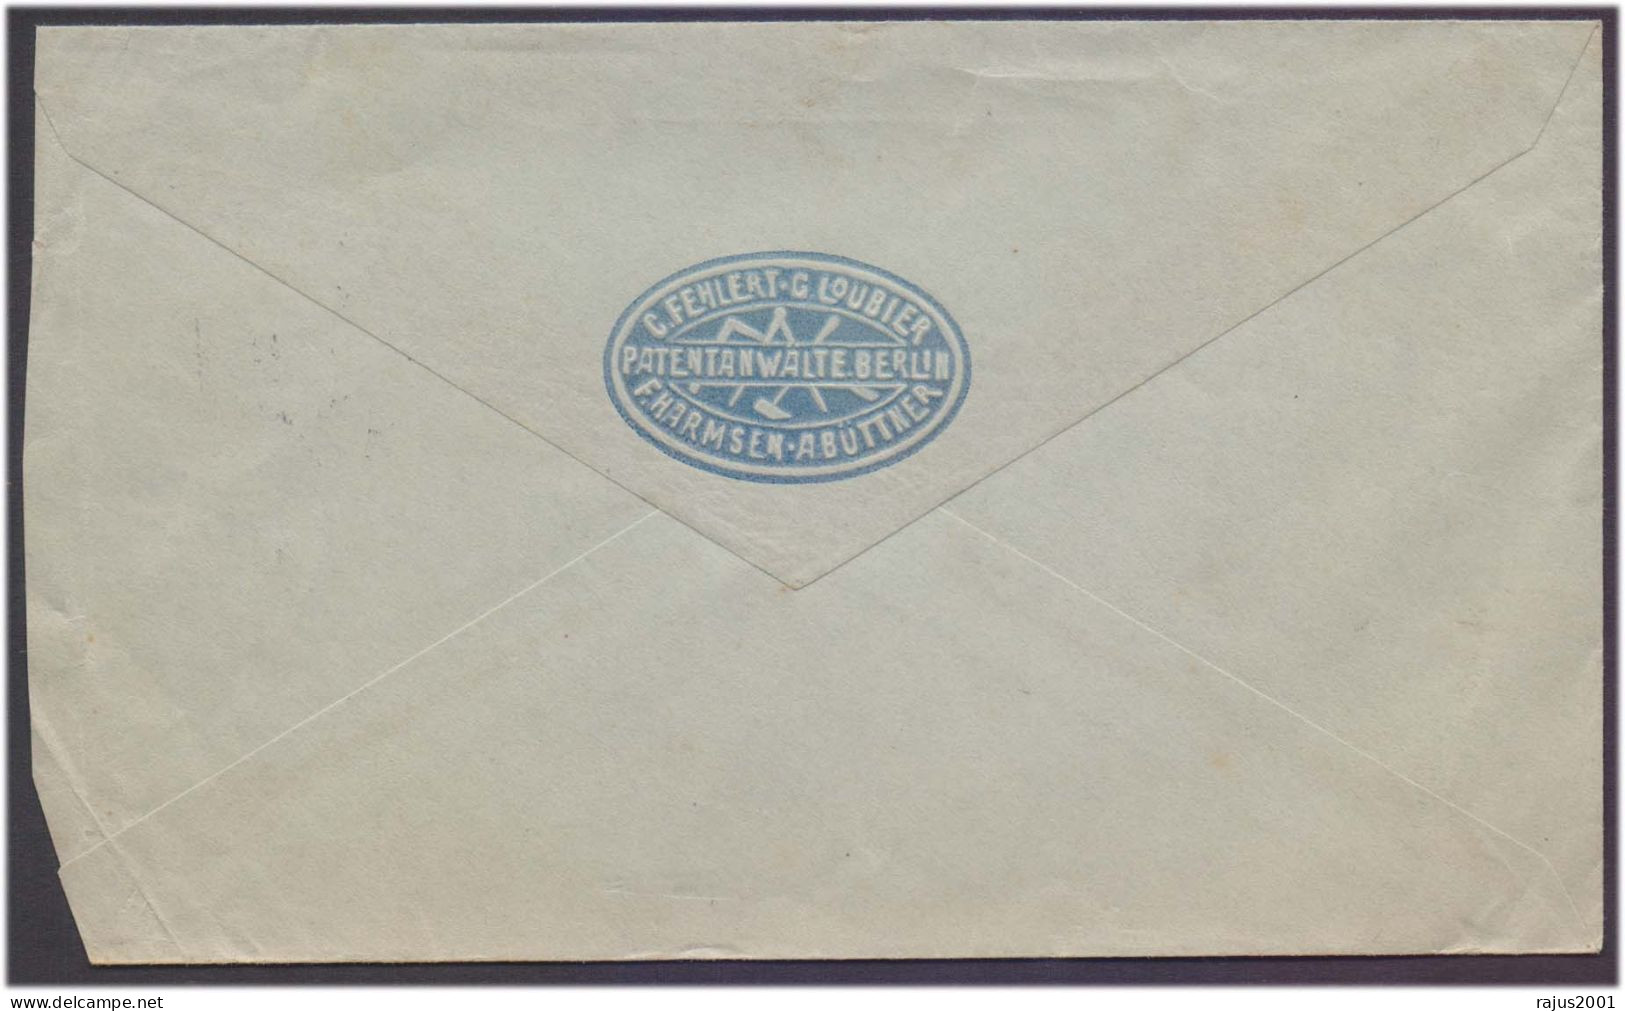 Deutsches Reich Berlin 1906, Received Cyrus Kehr  Germany Postal Stationery Cover - Omslagen